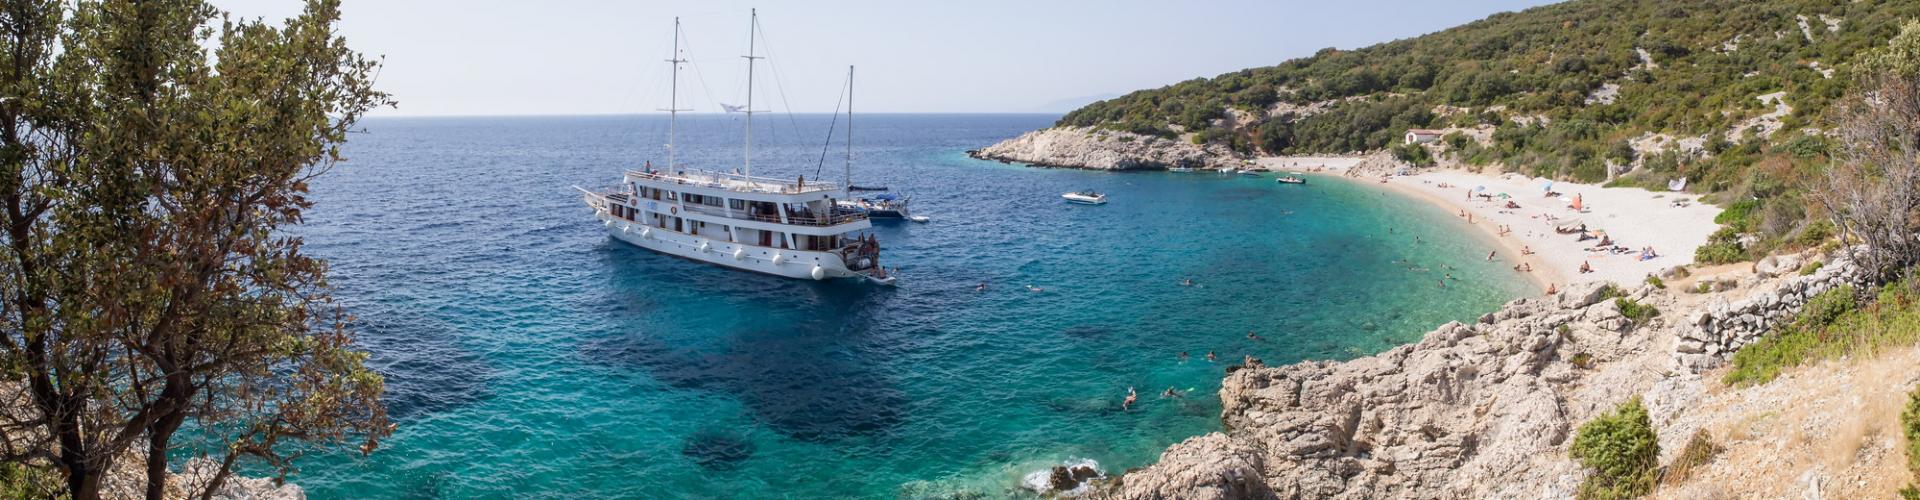 2011. Premium kruzer MV Dalmatia